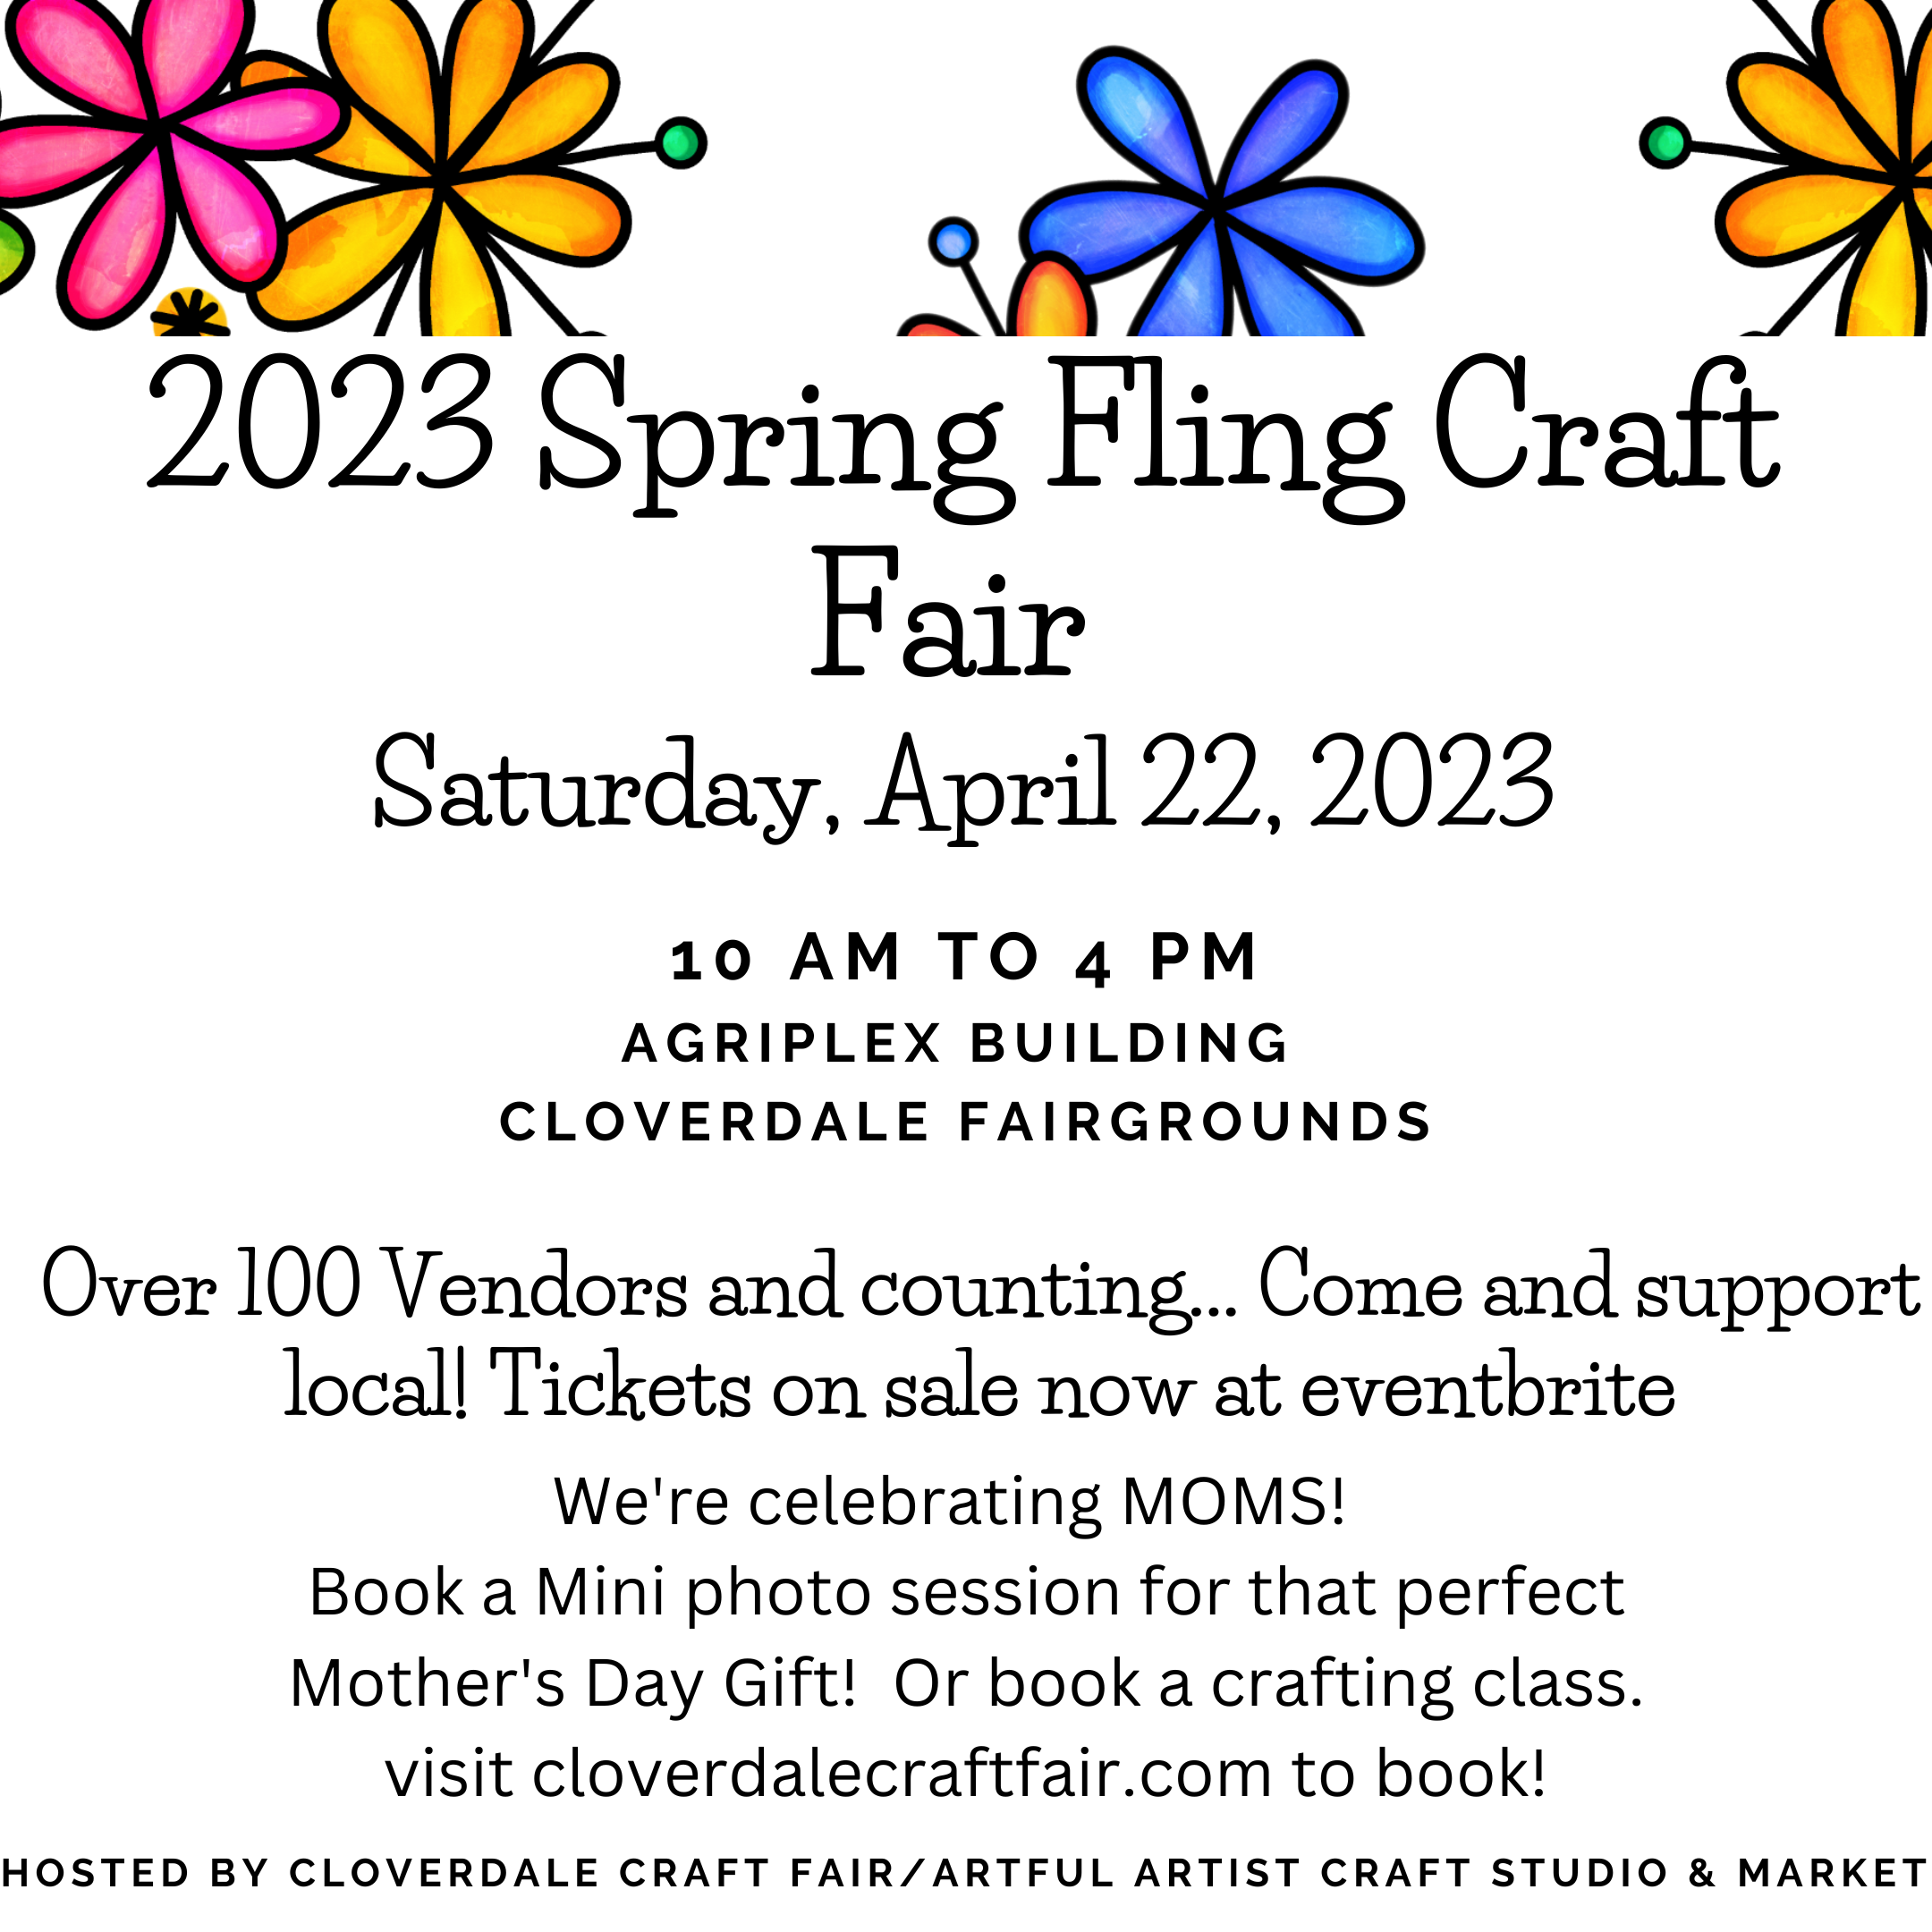 Spring Fling Craft Fair at the Agriplex